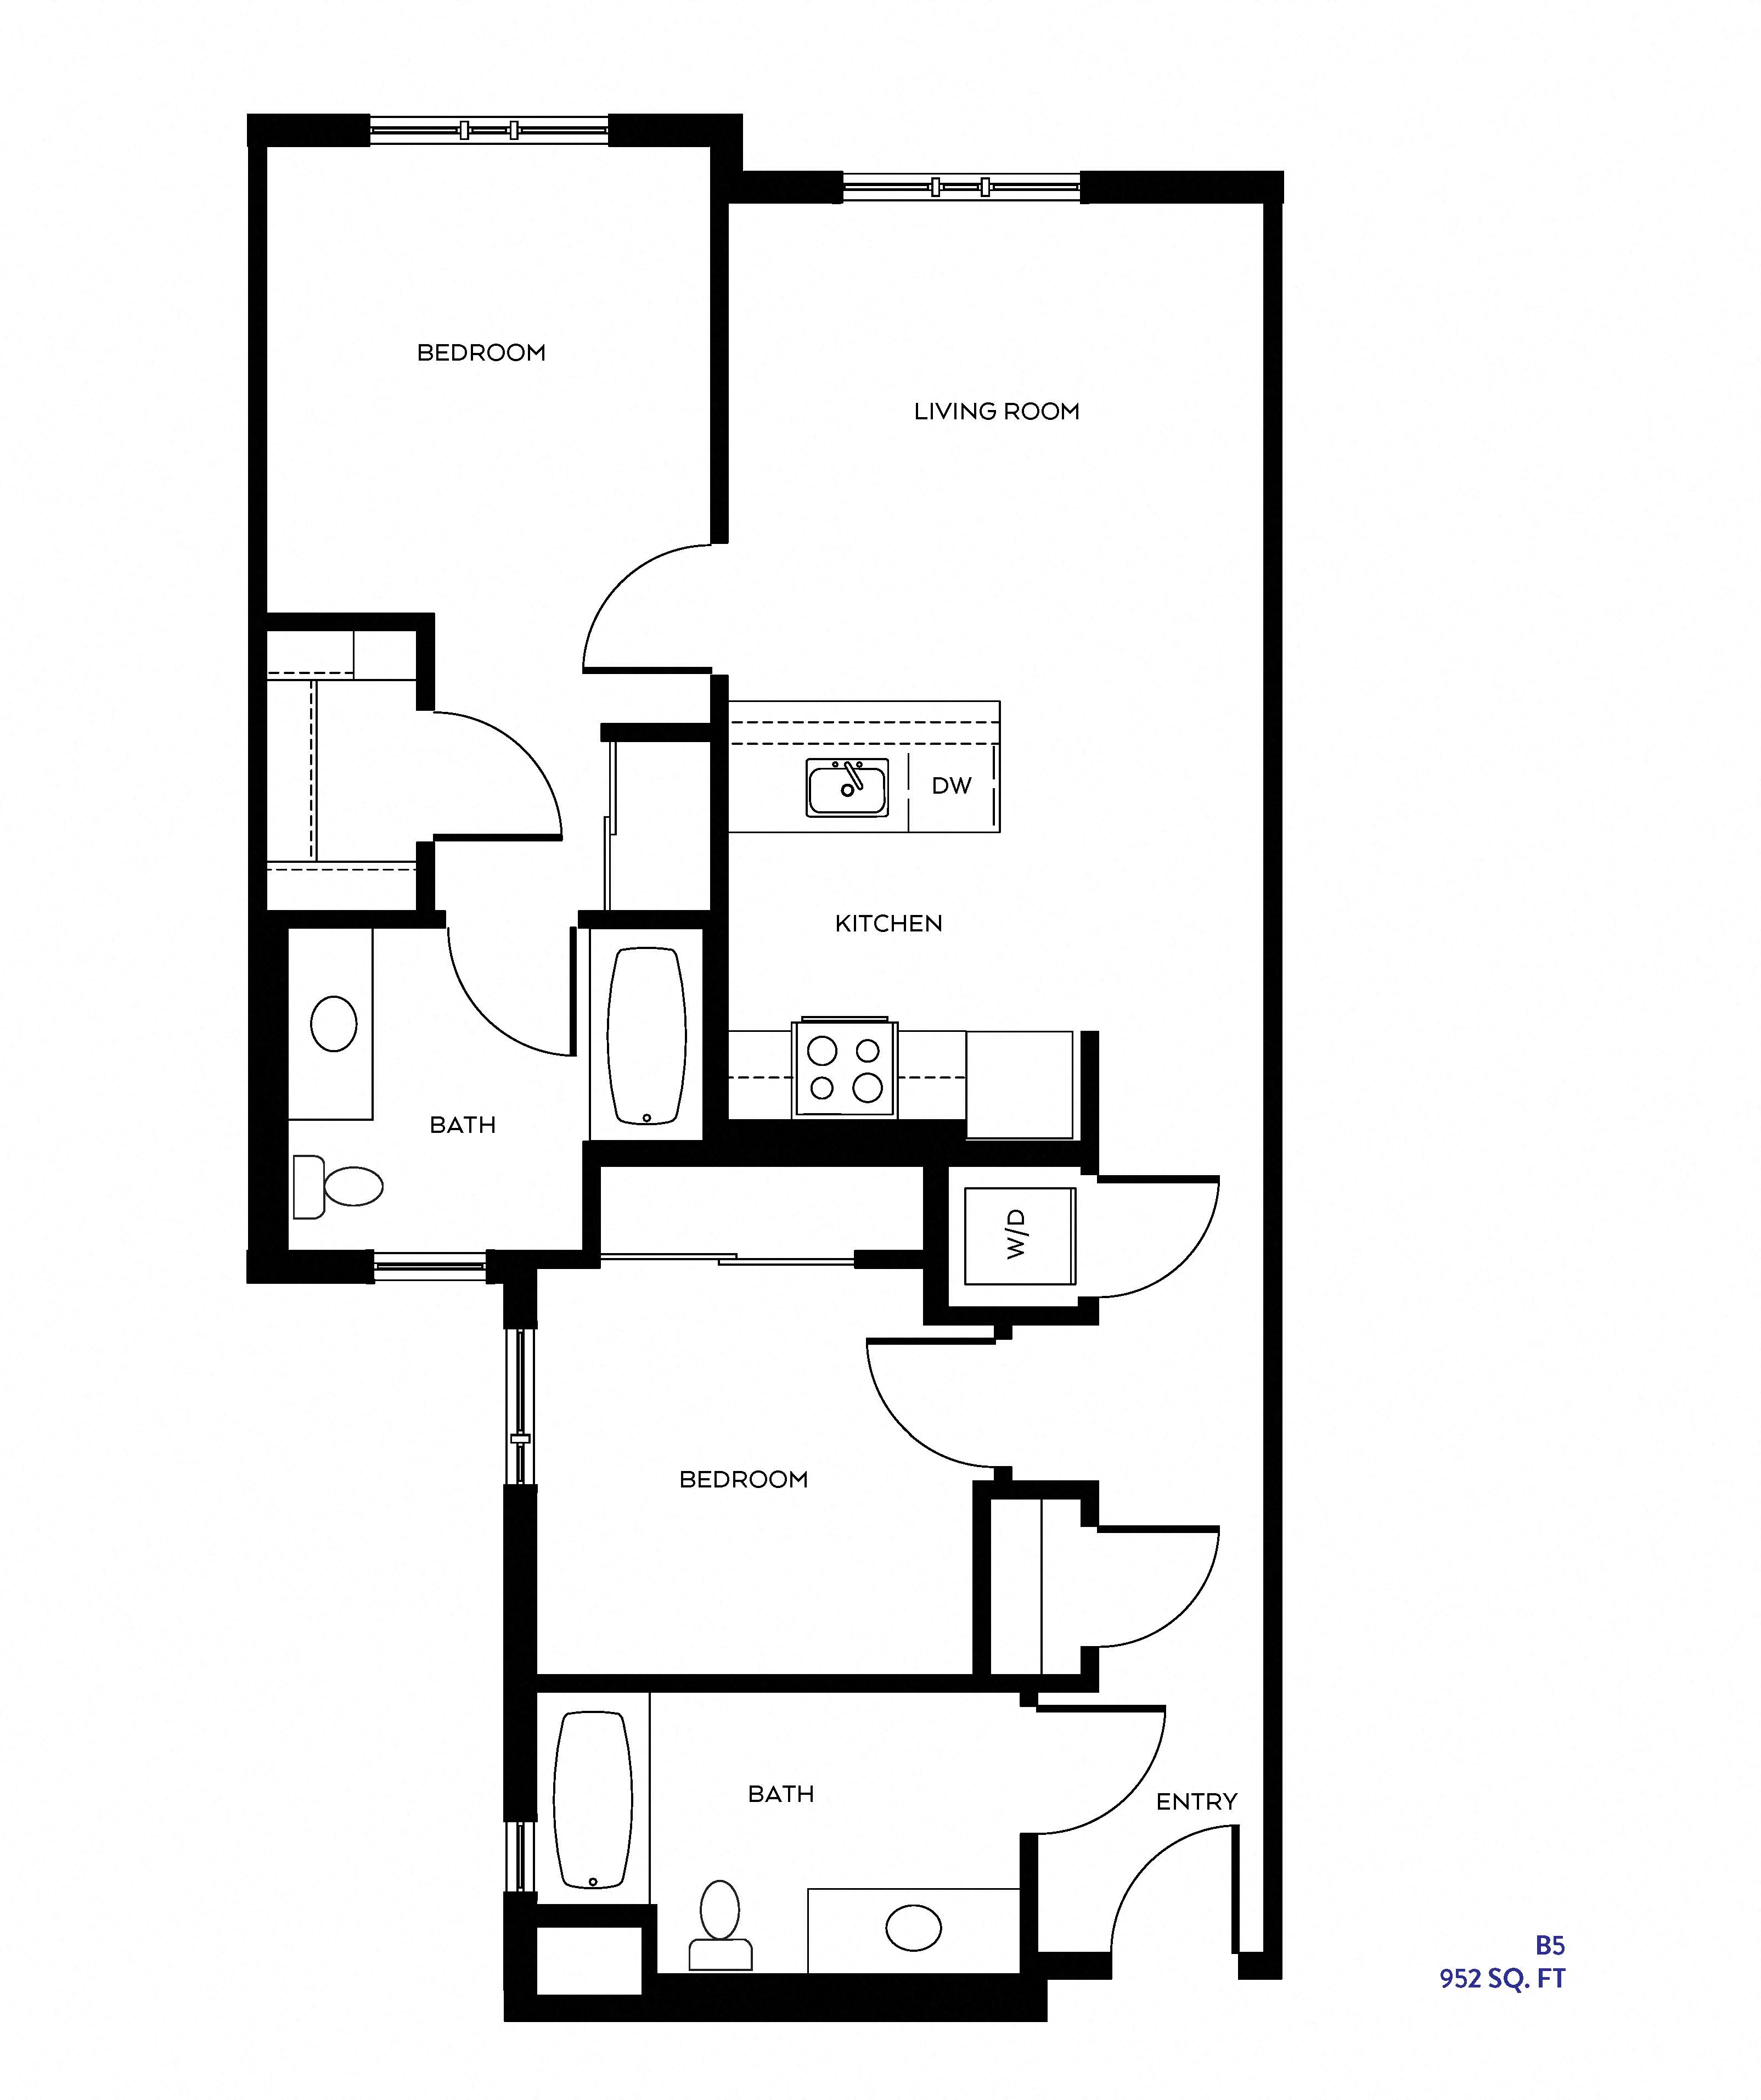 The B5 floor plan